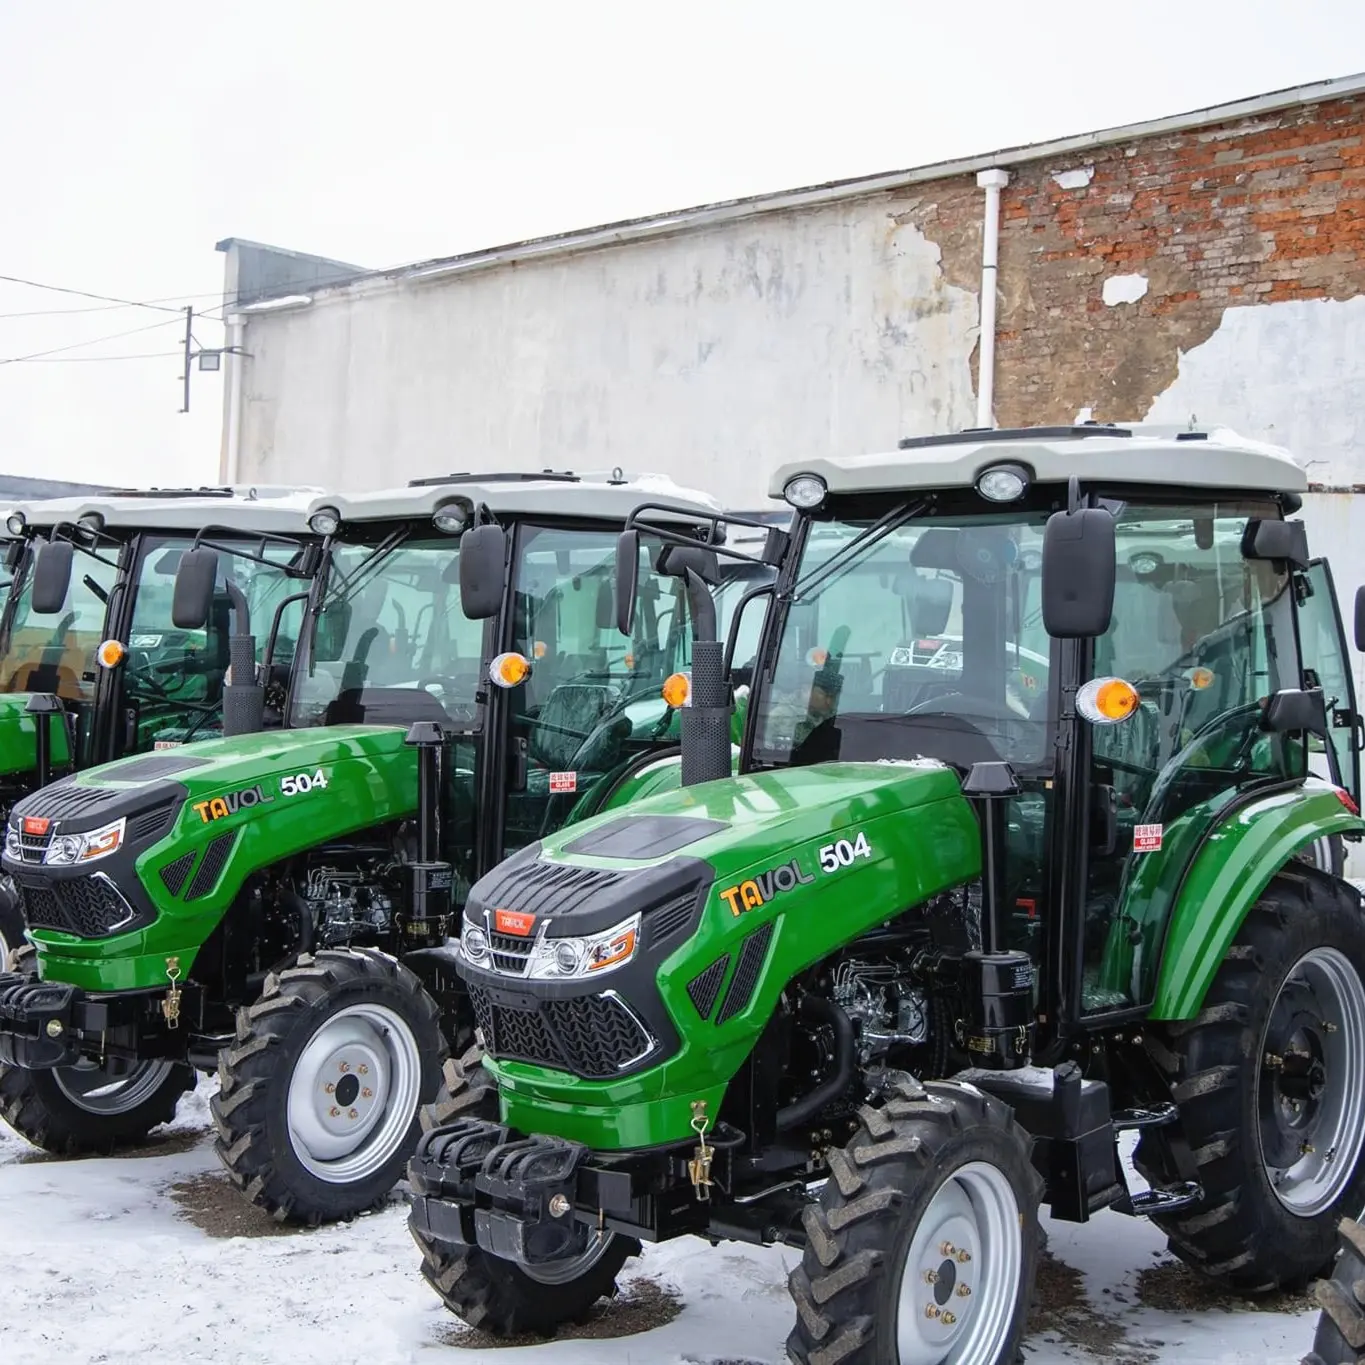 China Tavol Marke 504 554 604 704 Land maschinen Traktoren Ackers chlepper mit niedrigem Preis